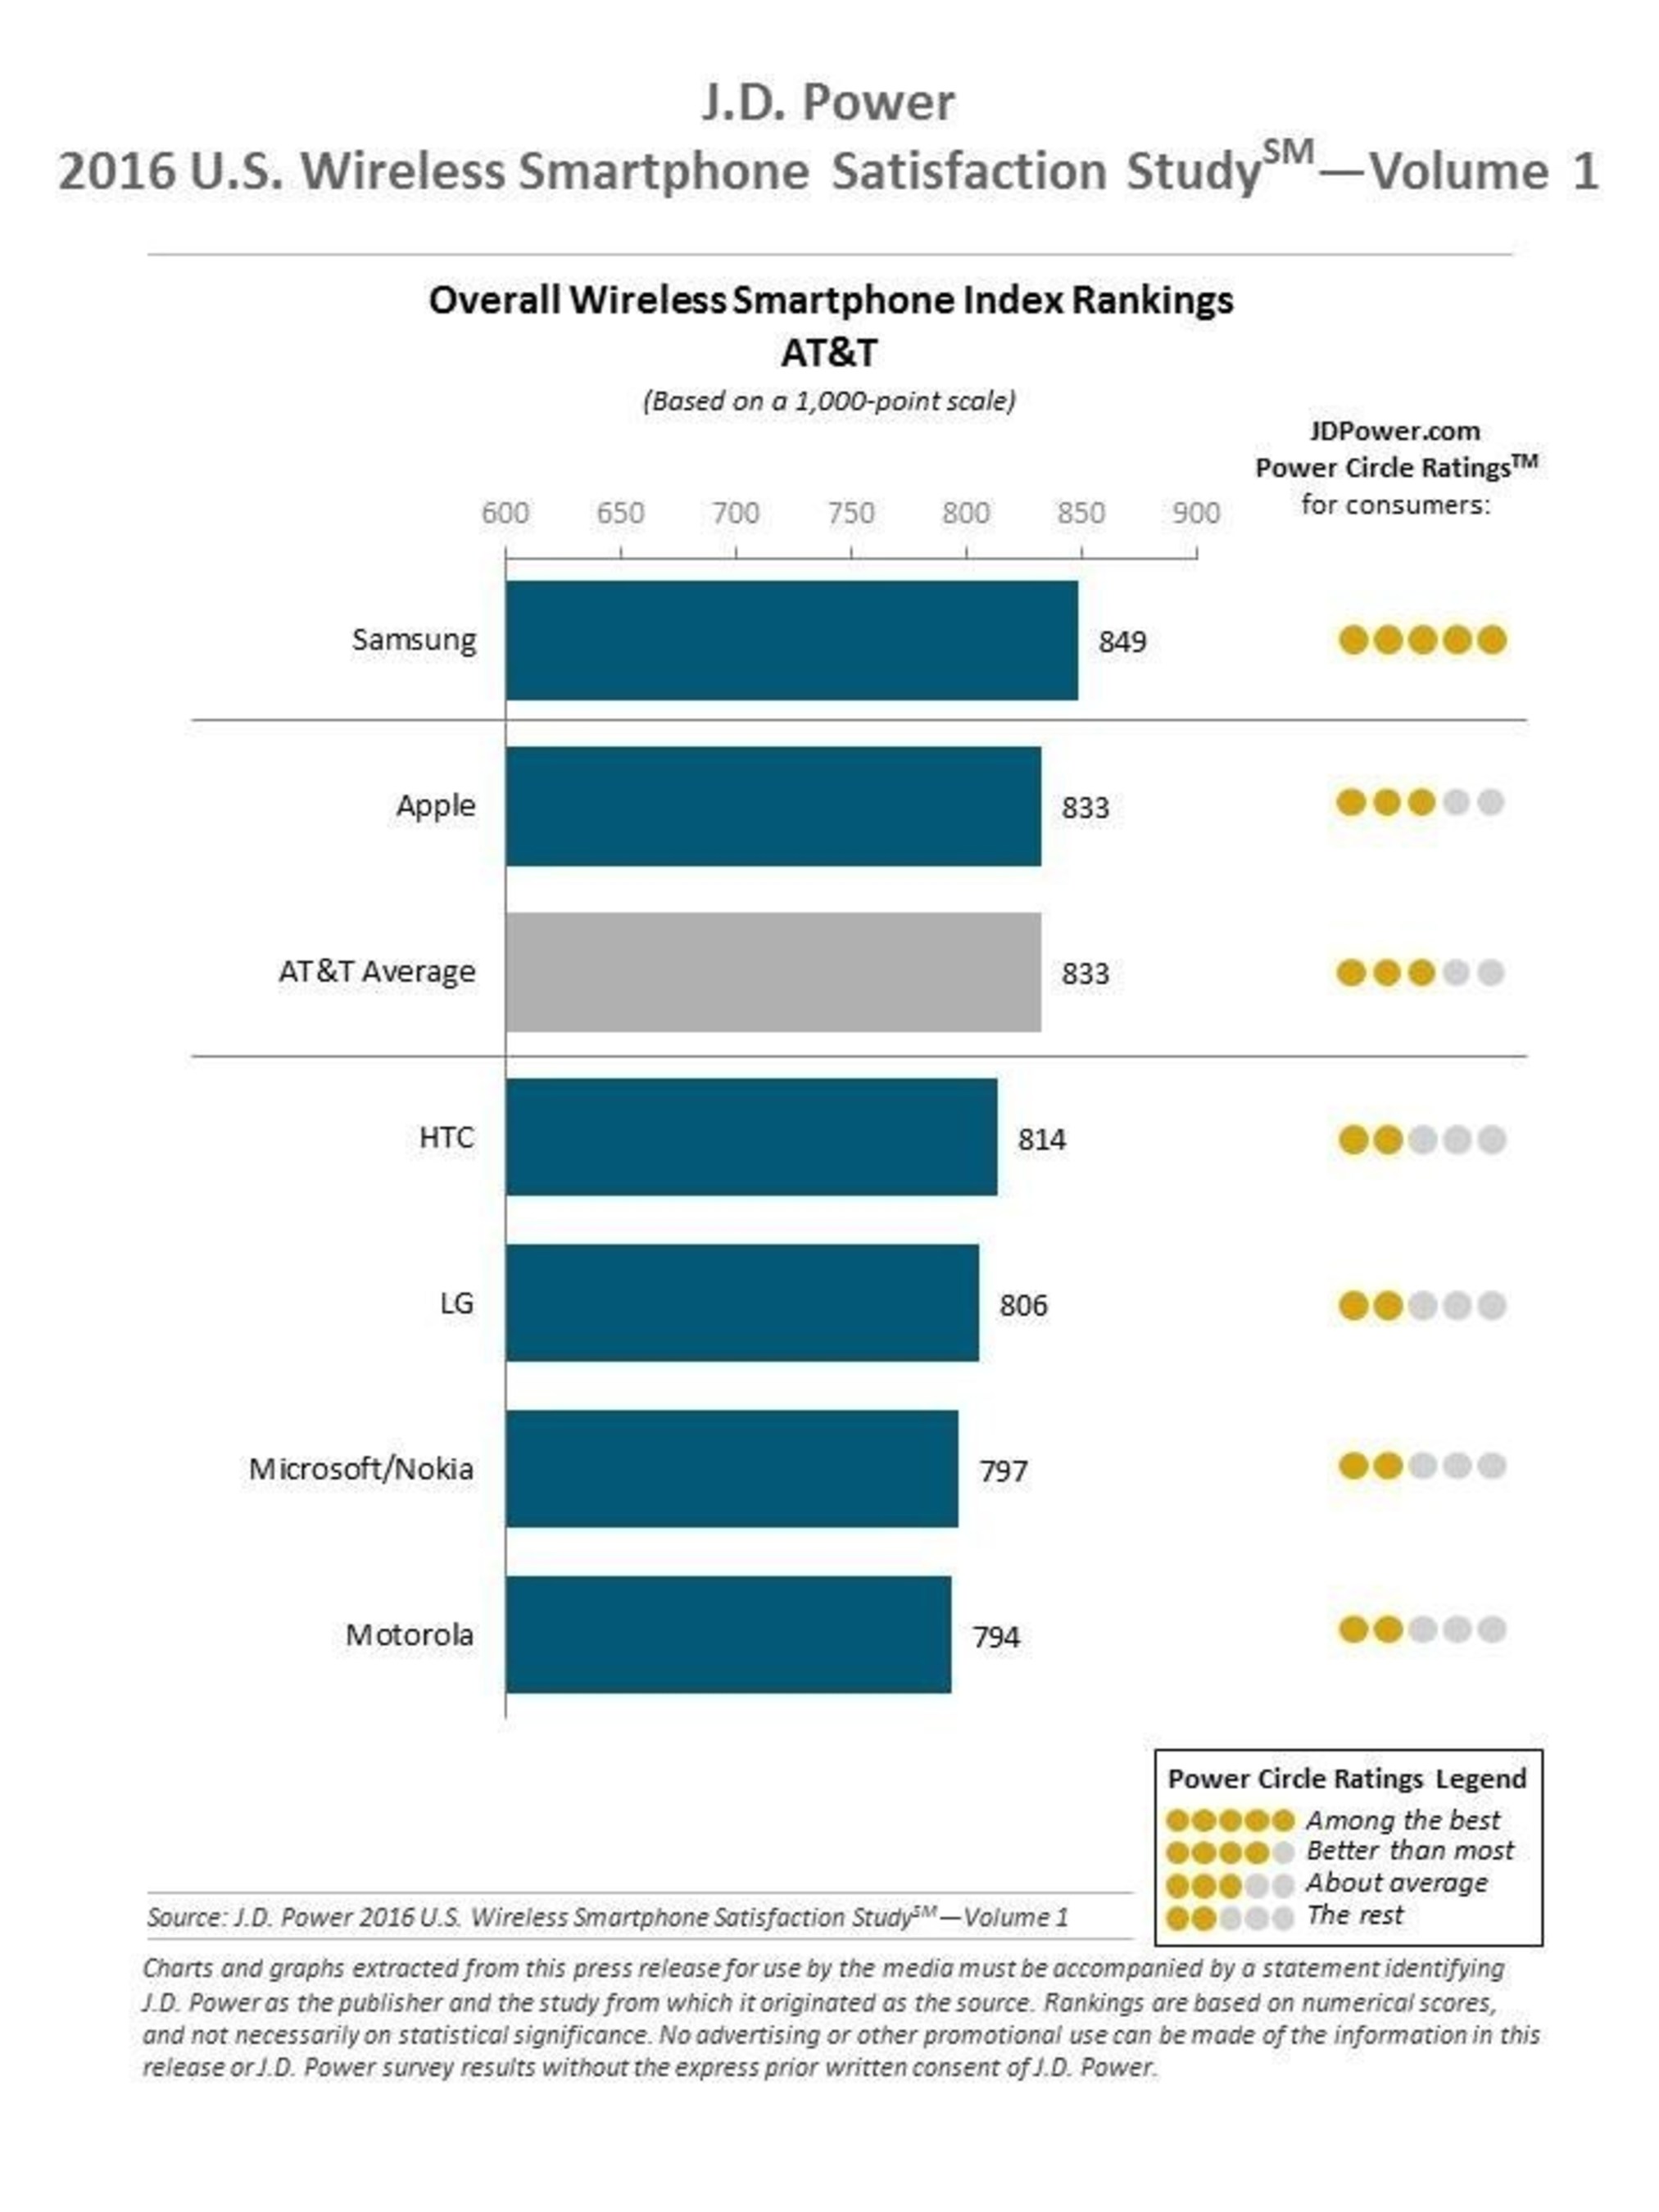 2016 J.D. Power Wireless Smartphone Ranking AT&T